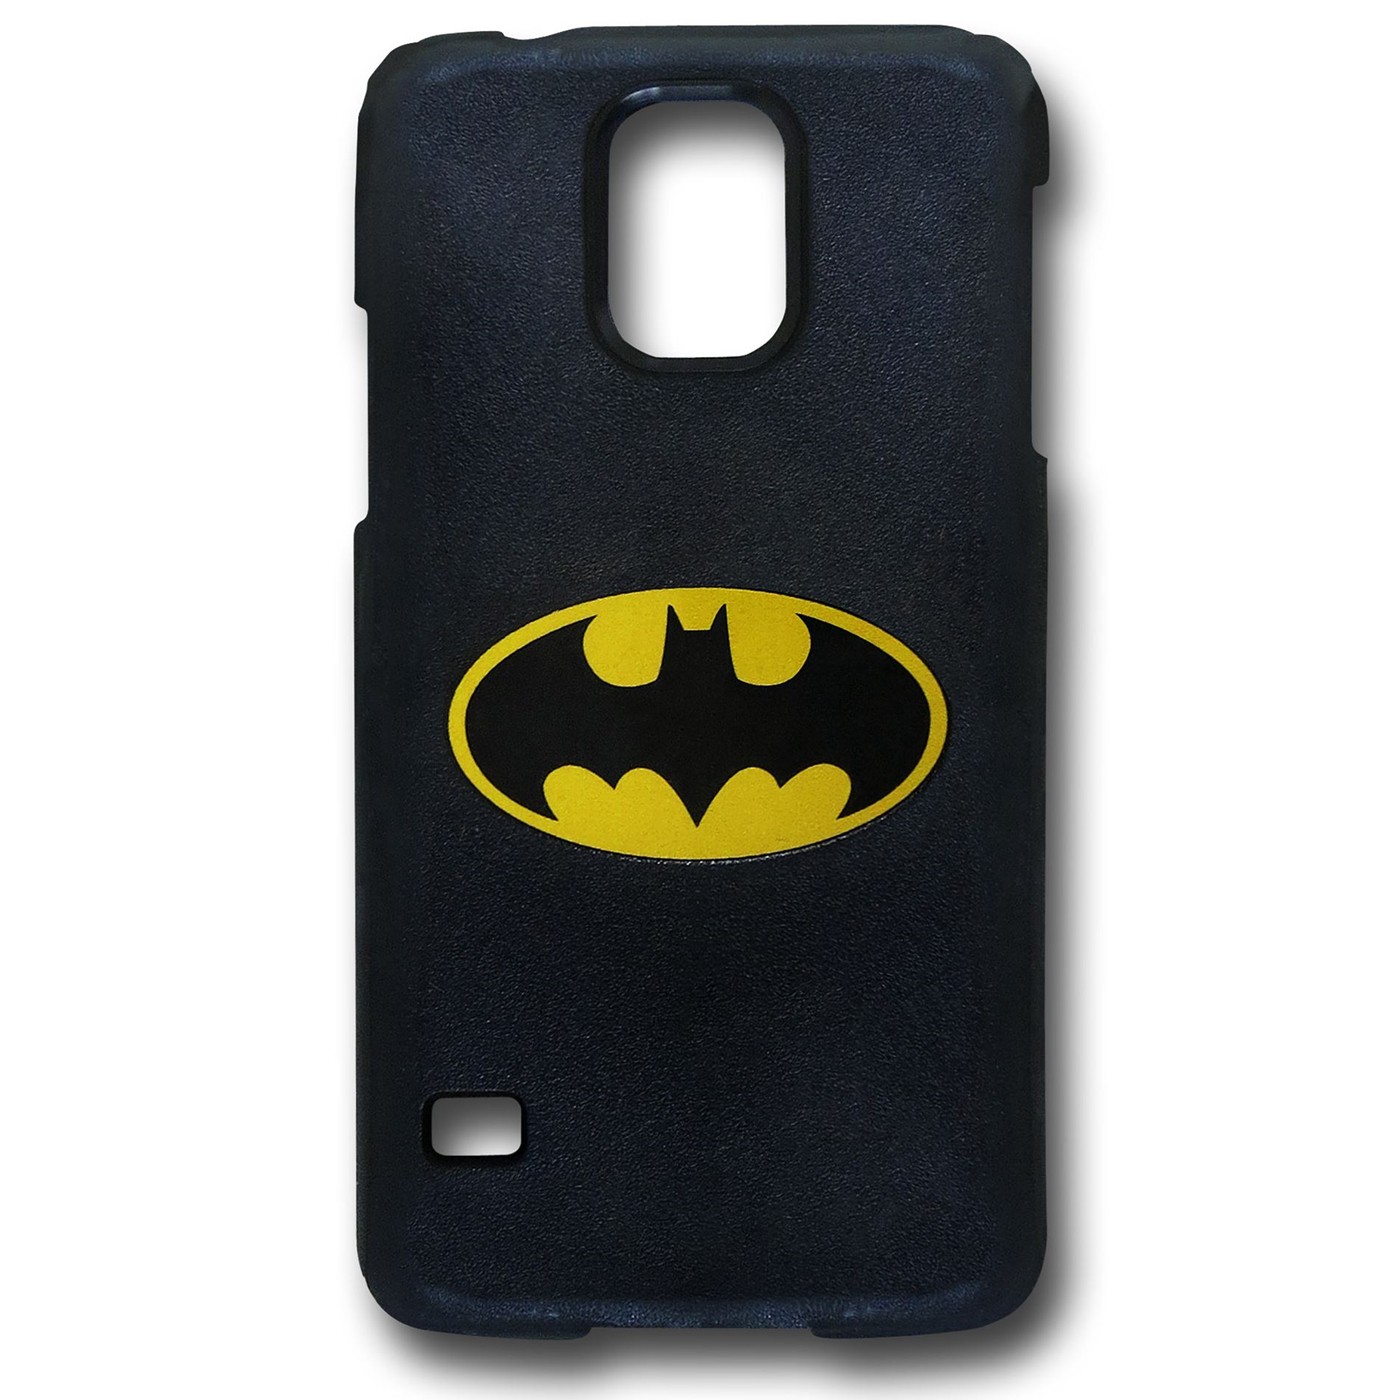 Batman Symbol Galaxy S5 Black Thinshield Case